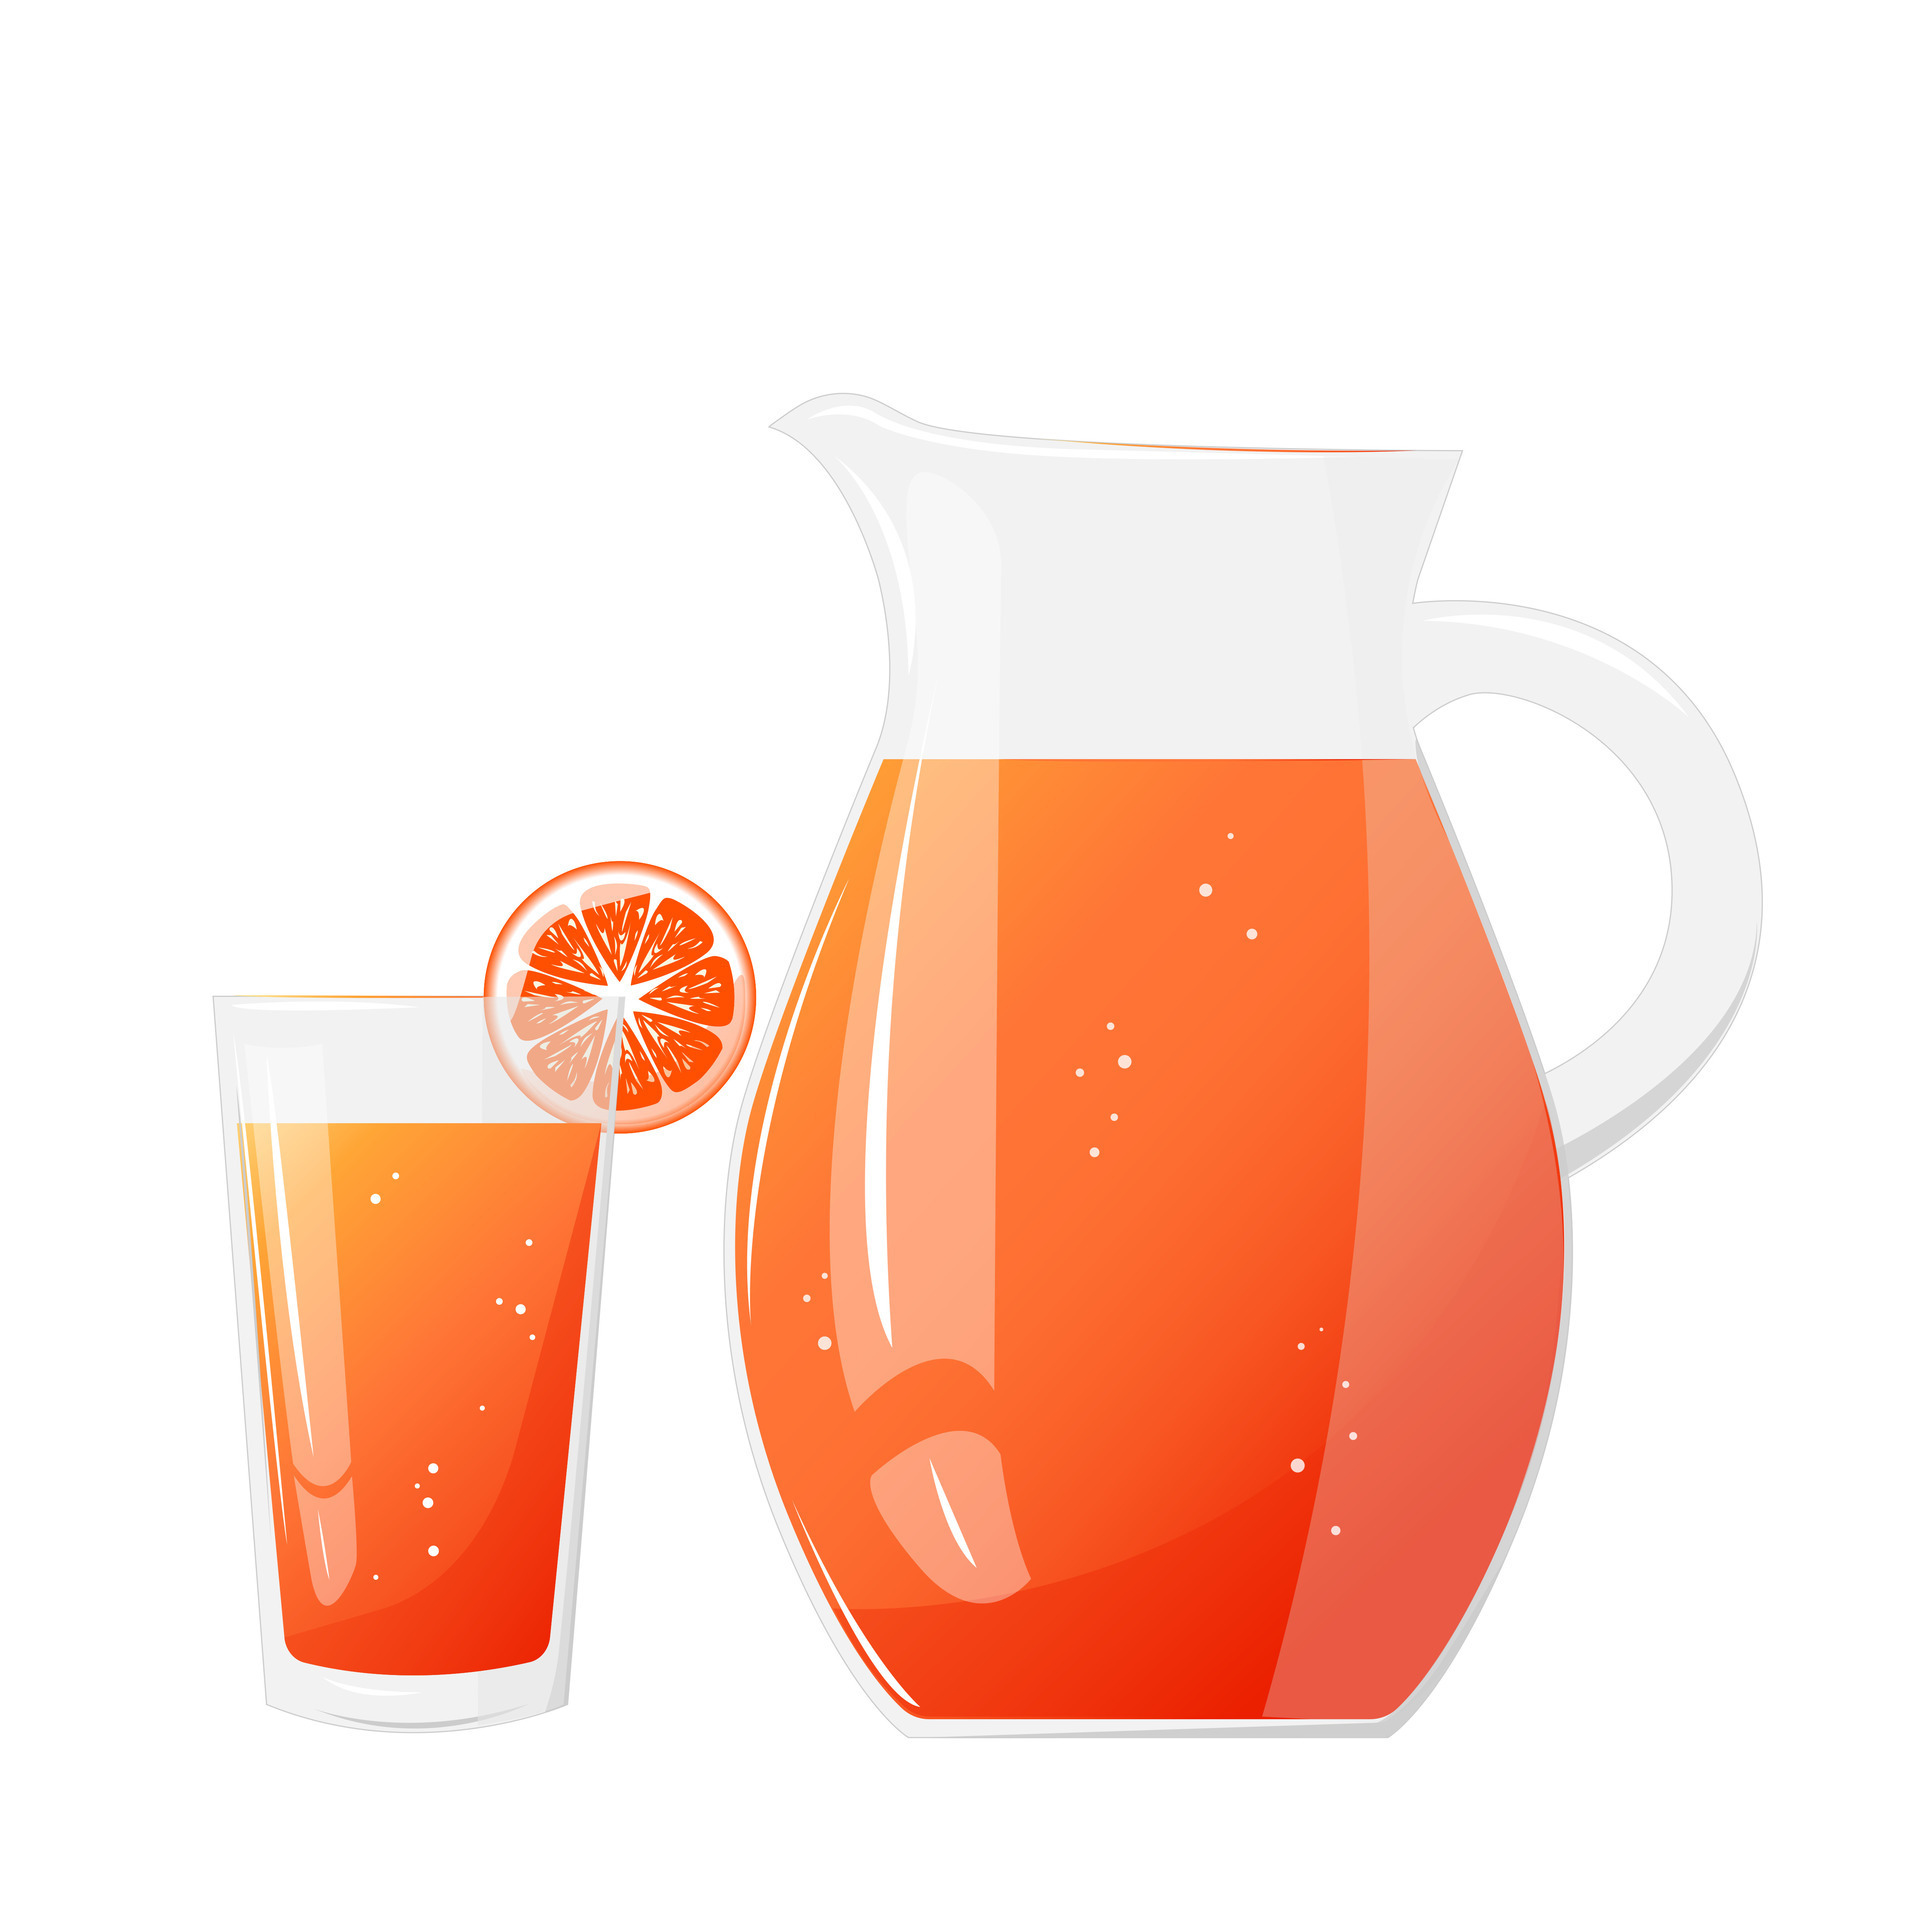 https://static.vecteezy.com/system/resources/previews/025/065/888/original/lemonade-juice-jug-and-glass-with-orange-fruit-refreshing-drink-for-design-of-fresh-product-juice-canned-food-menu-for-cafe-poster-flat-illustration-design-vector.jpg